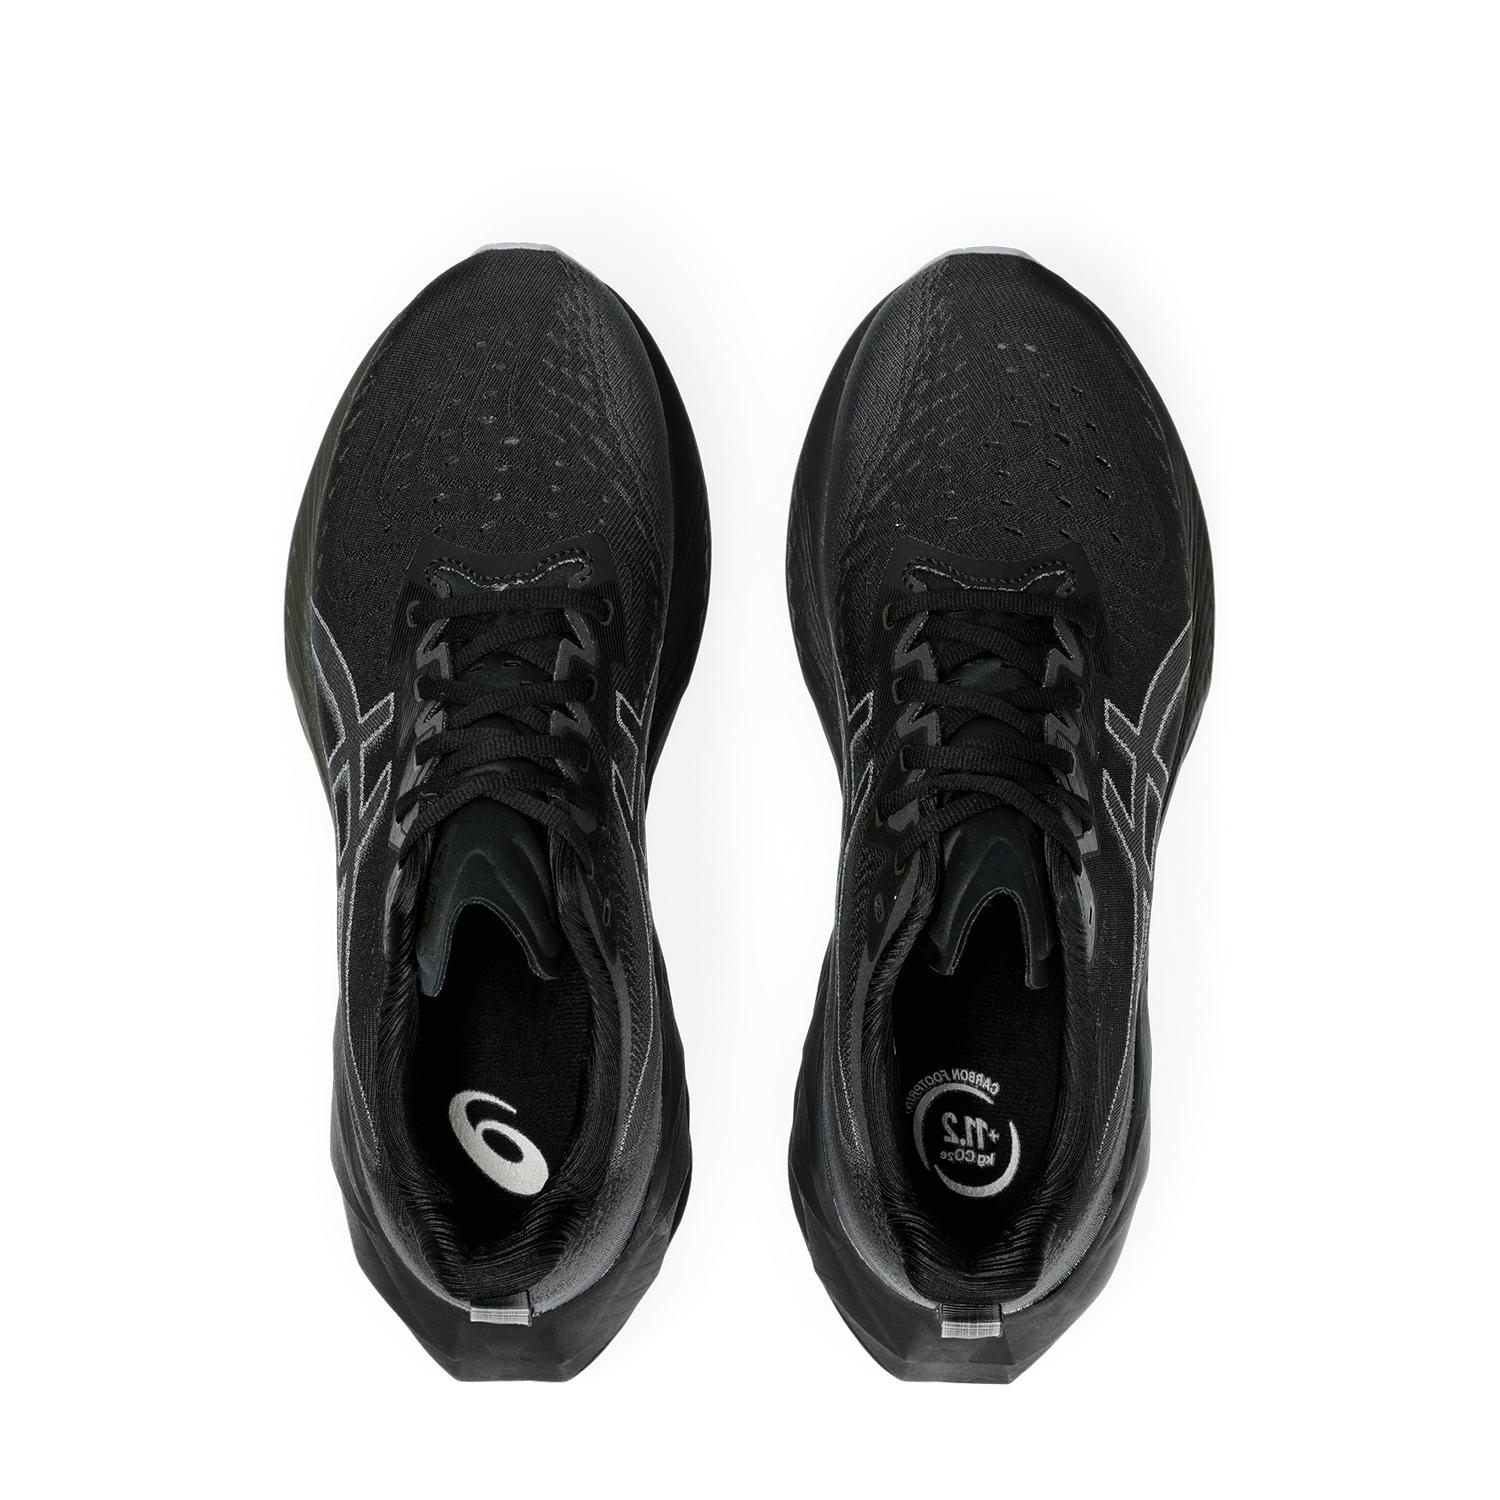 Asics Novablast 4 Men's Running Shoes - Black/Graphite Grey